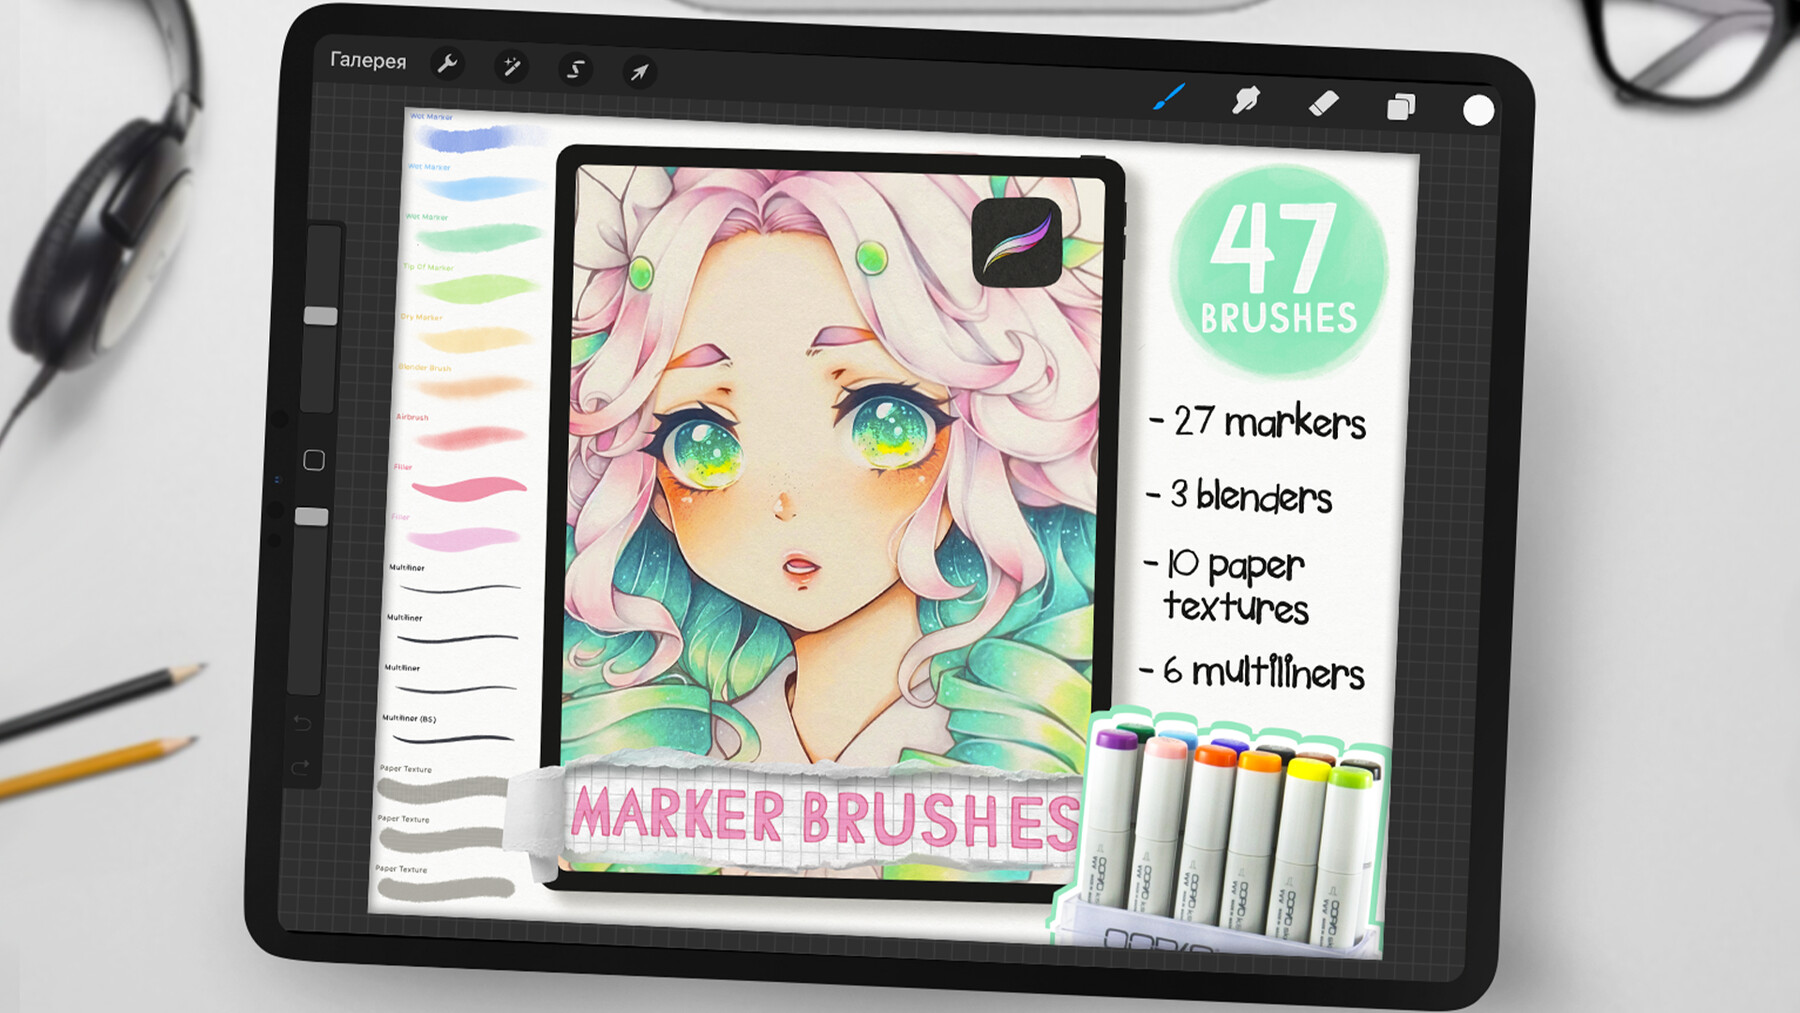 Mini Sketchbook Set – Procreate Brushes